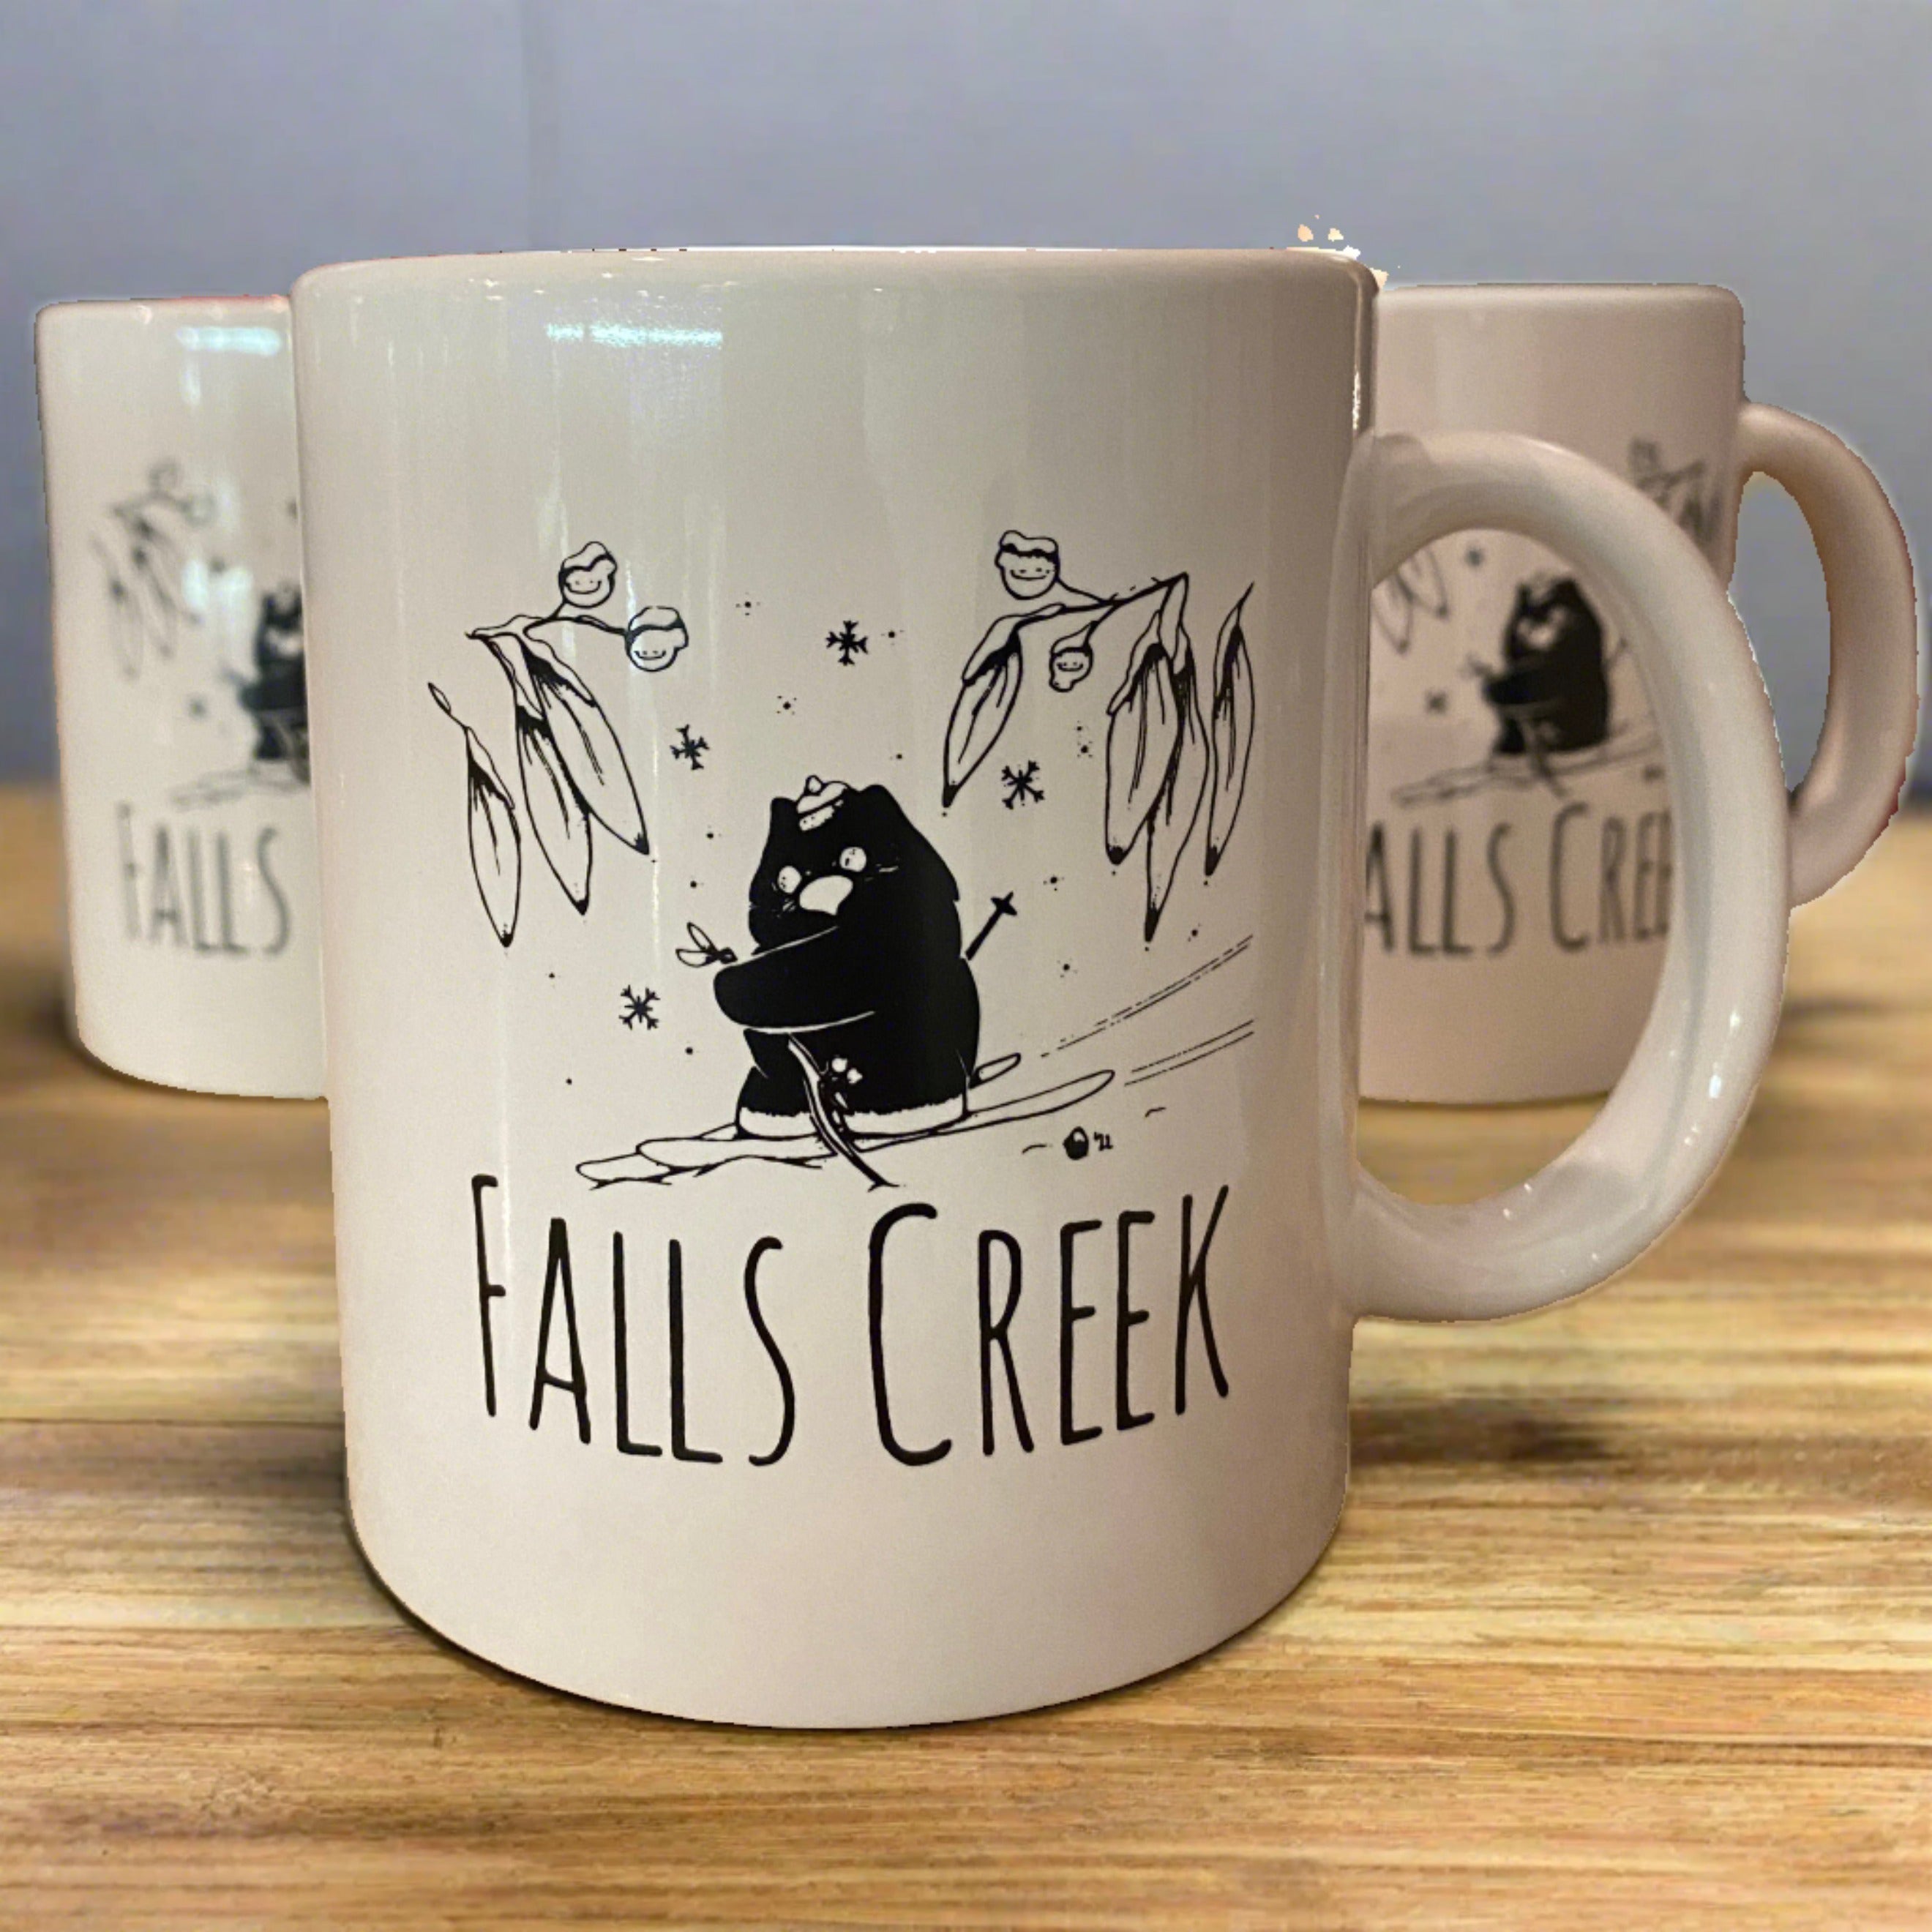 Falls Creek Agent K Ceramic Mugs. Close up 3 mugs